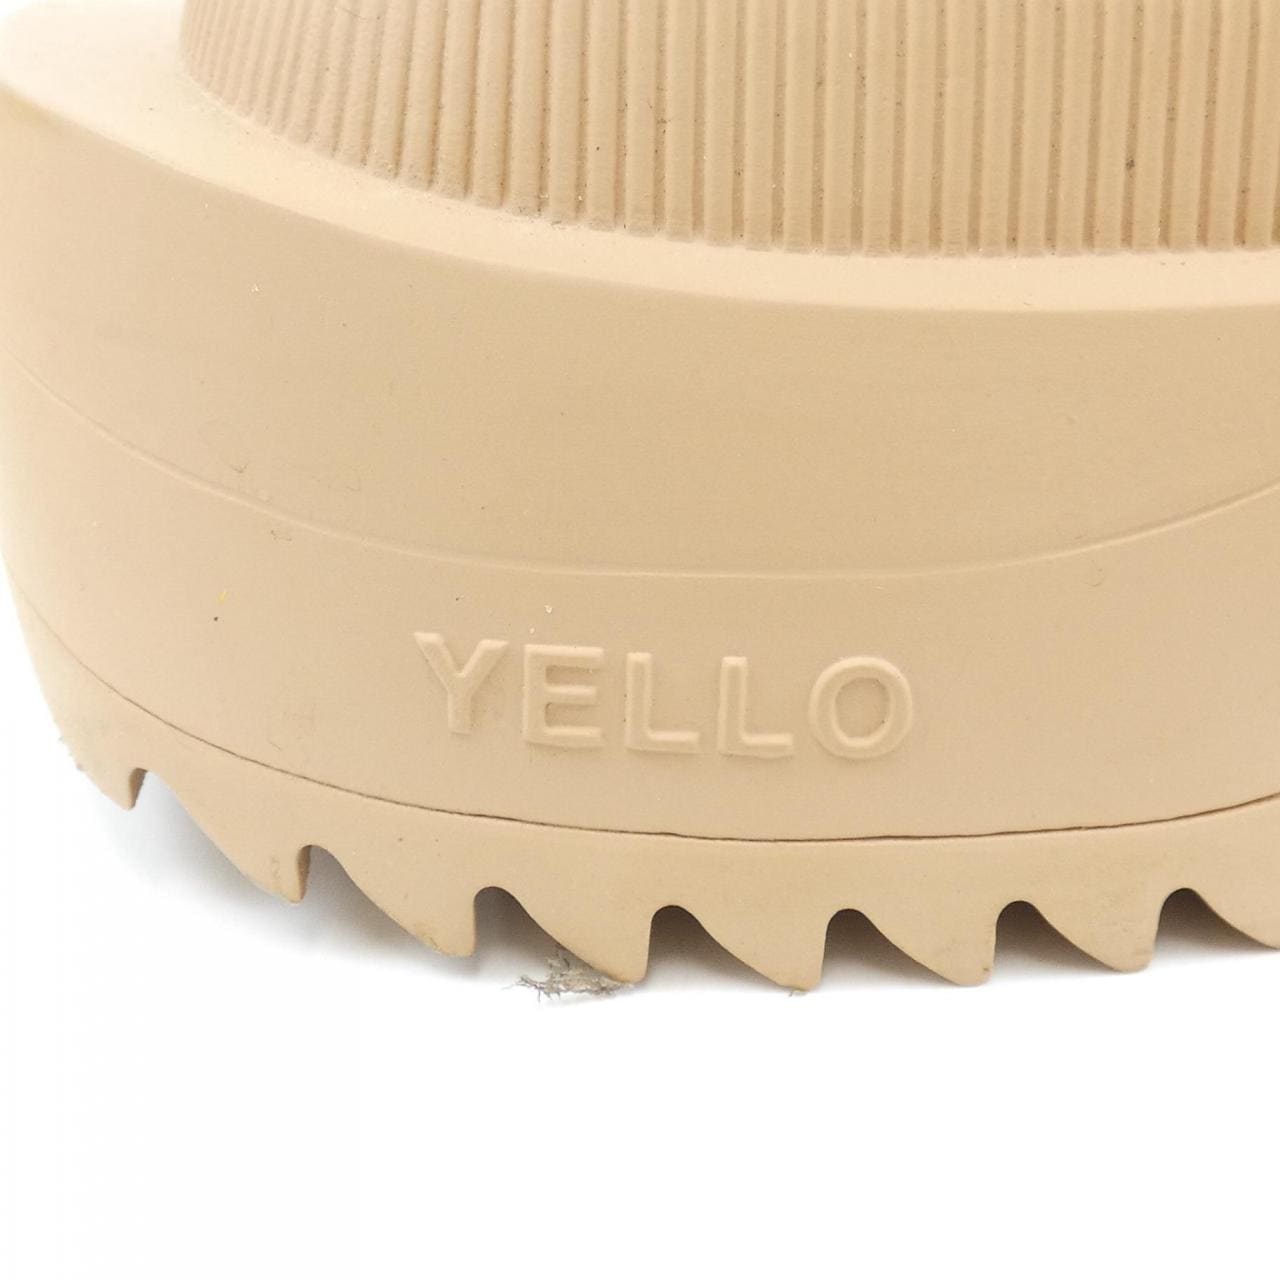 YELLO Sandals